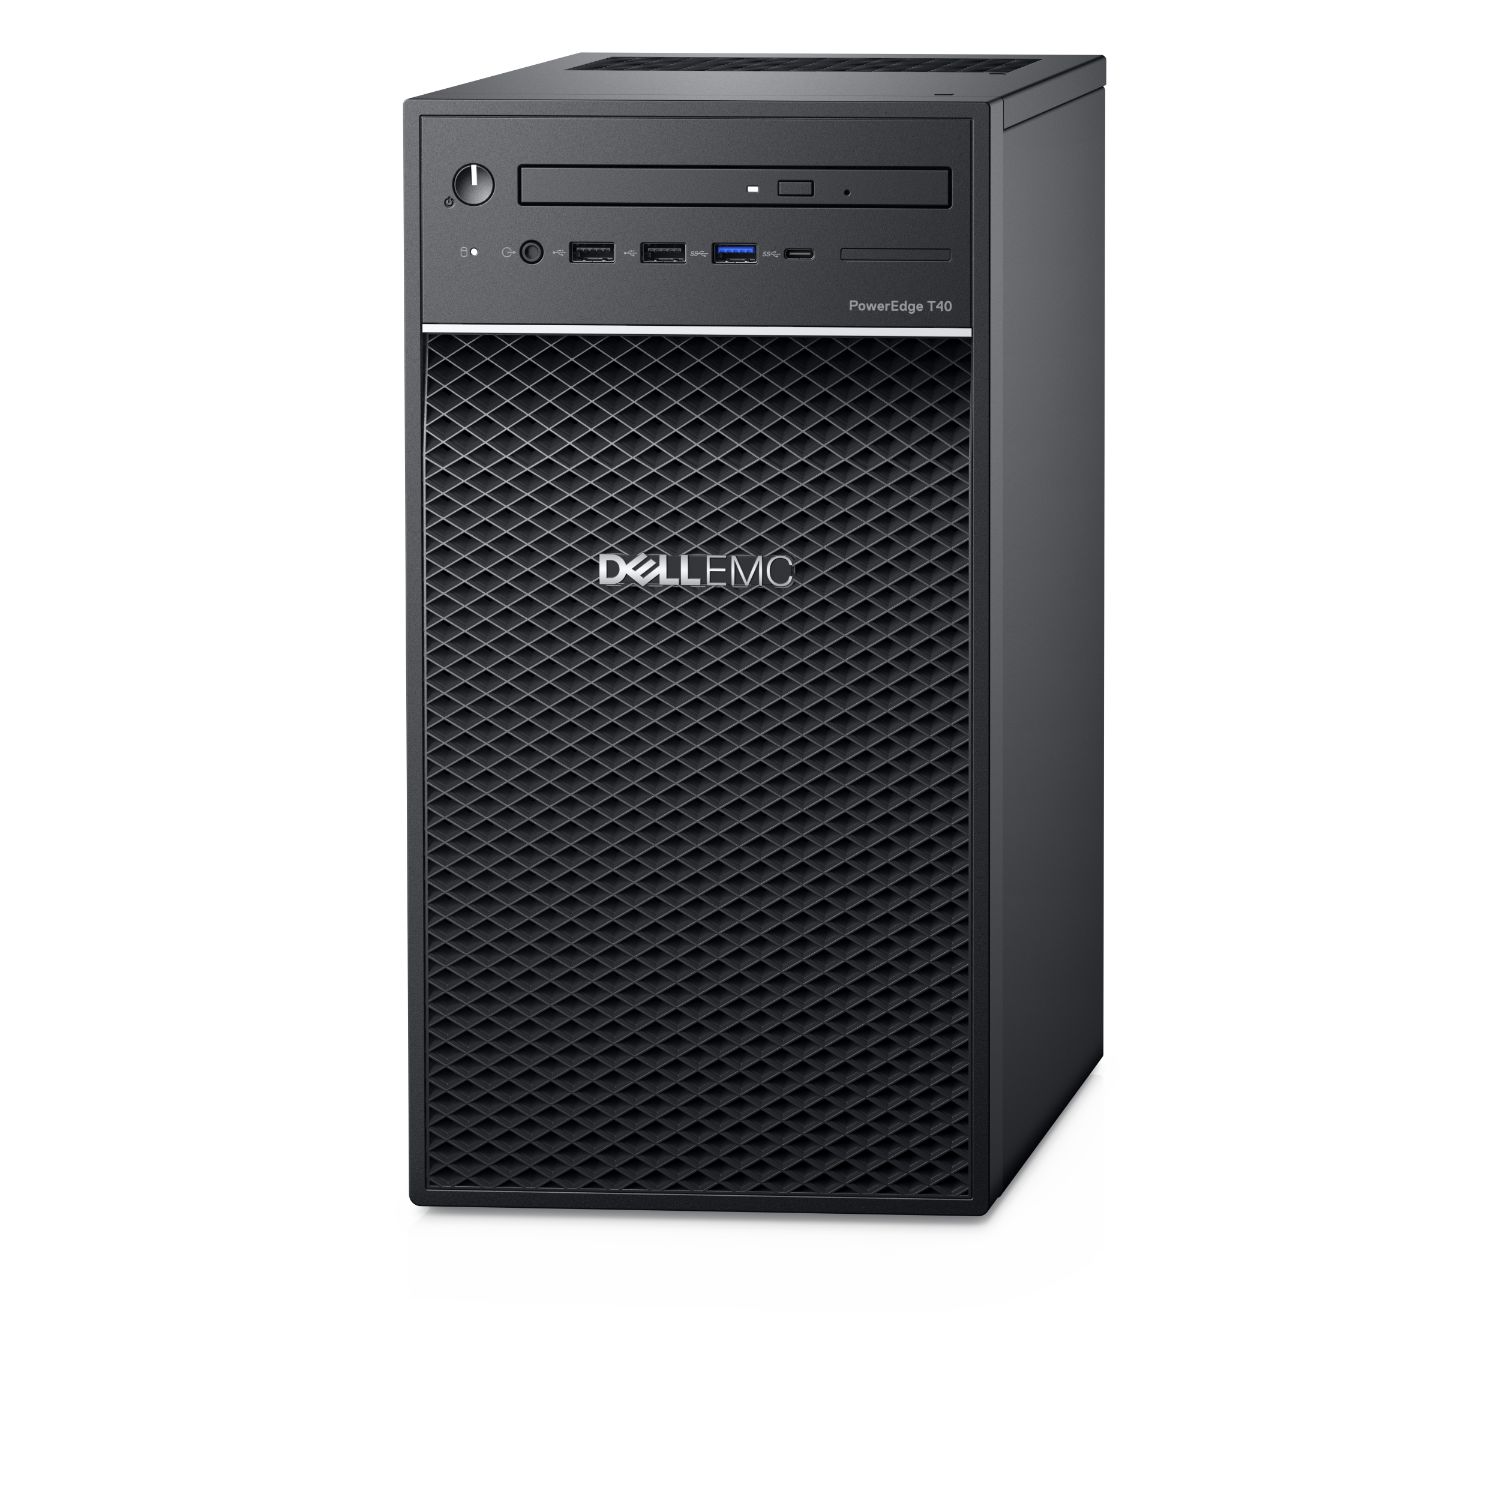 550HK - Dell PowerEdge T40 MiniTorre Intel Xeon E-2224G 8Gb 1Tb DVDRW Gigabit Ethernet 300W Negro (550HK)